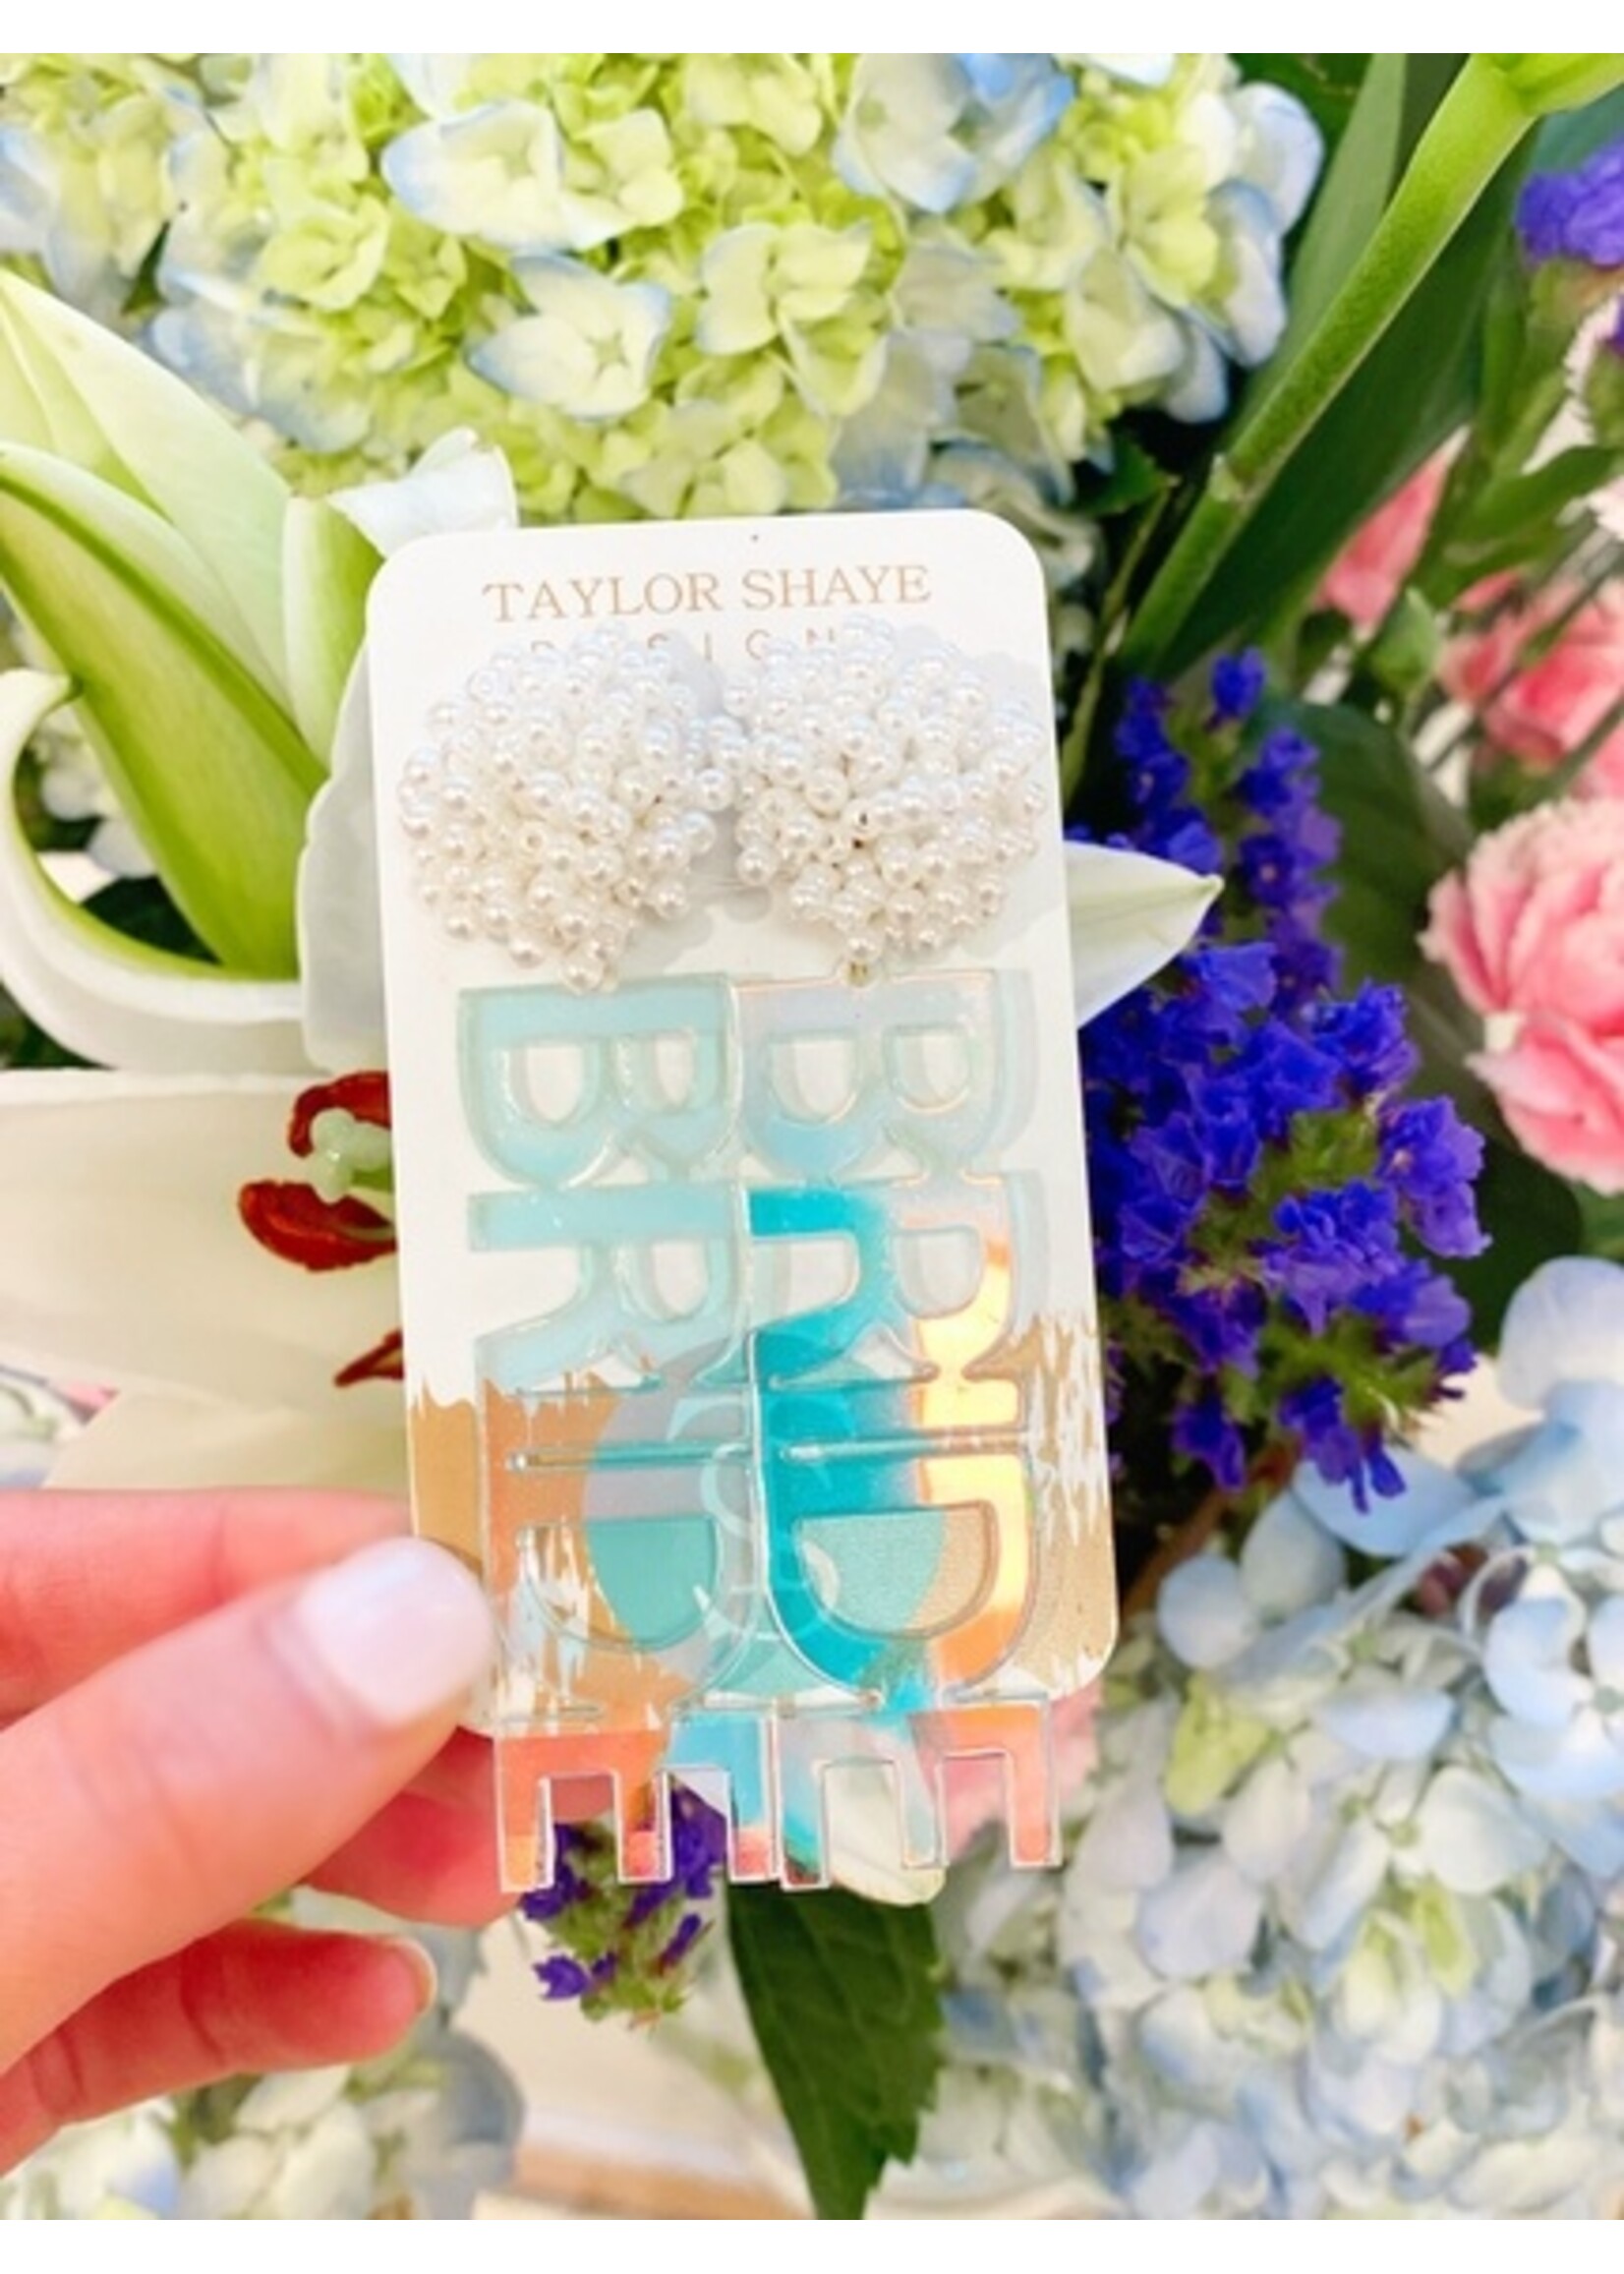 Taylor Shaye Taylor Shaye Iridescent BRIDE Earrings